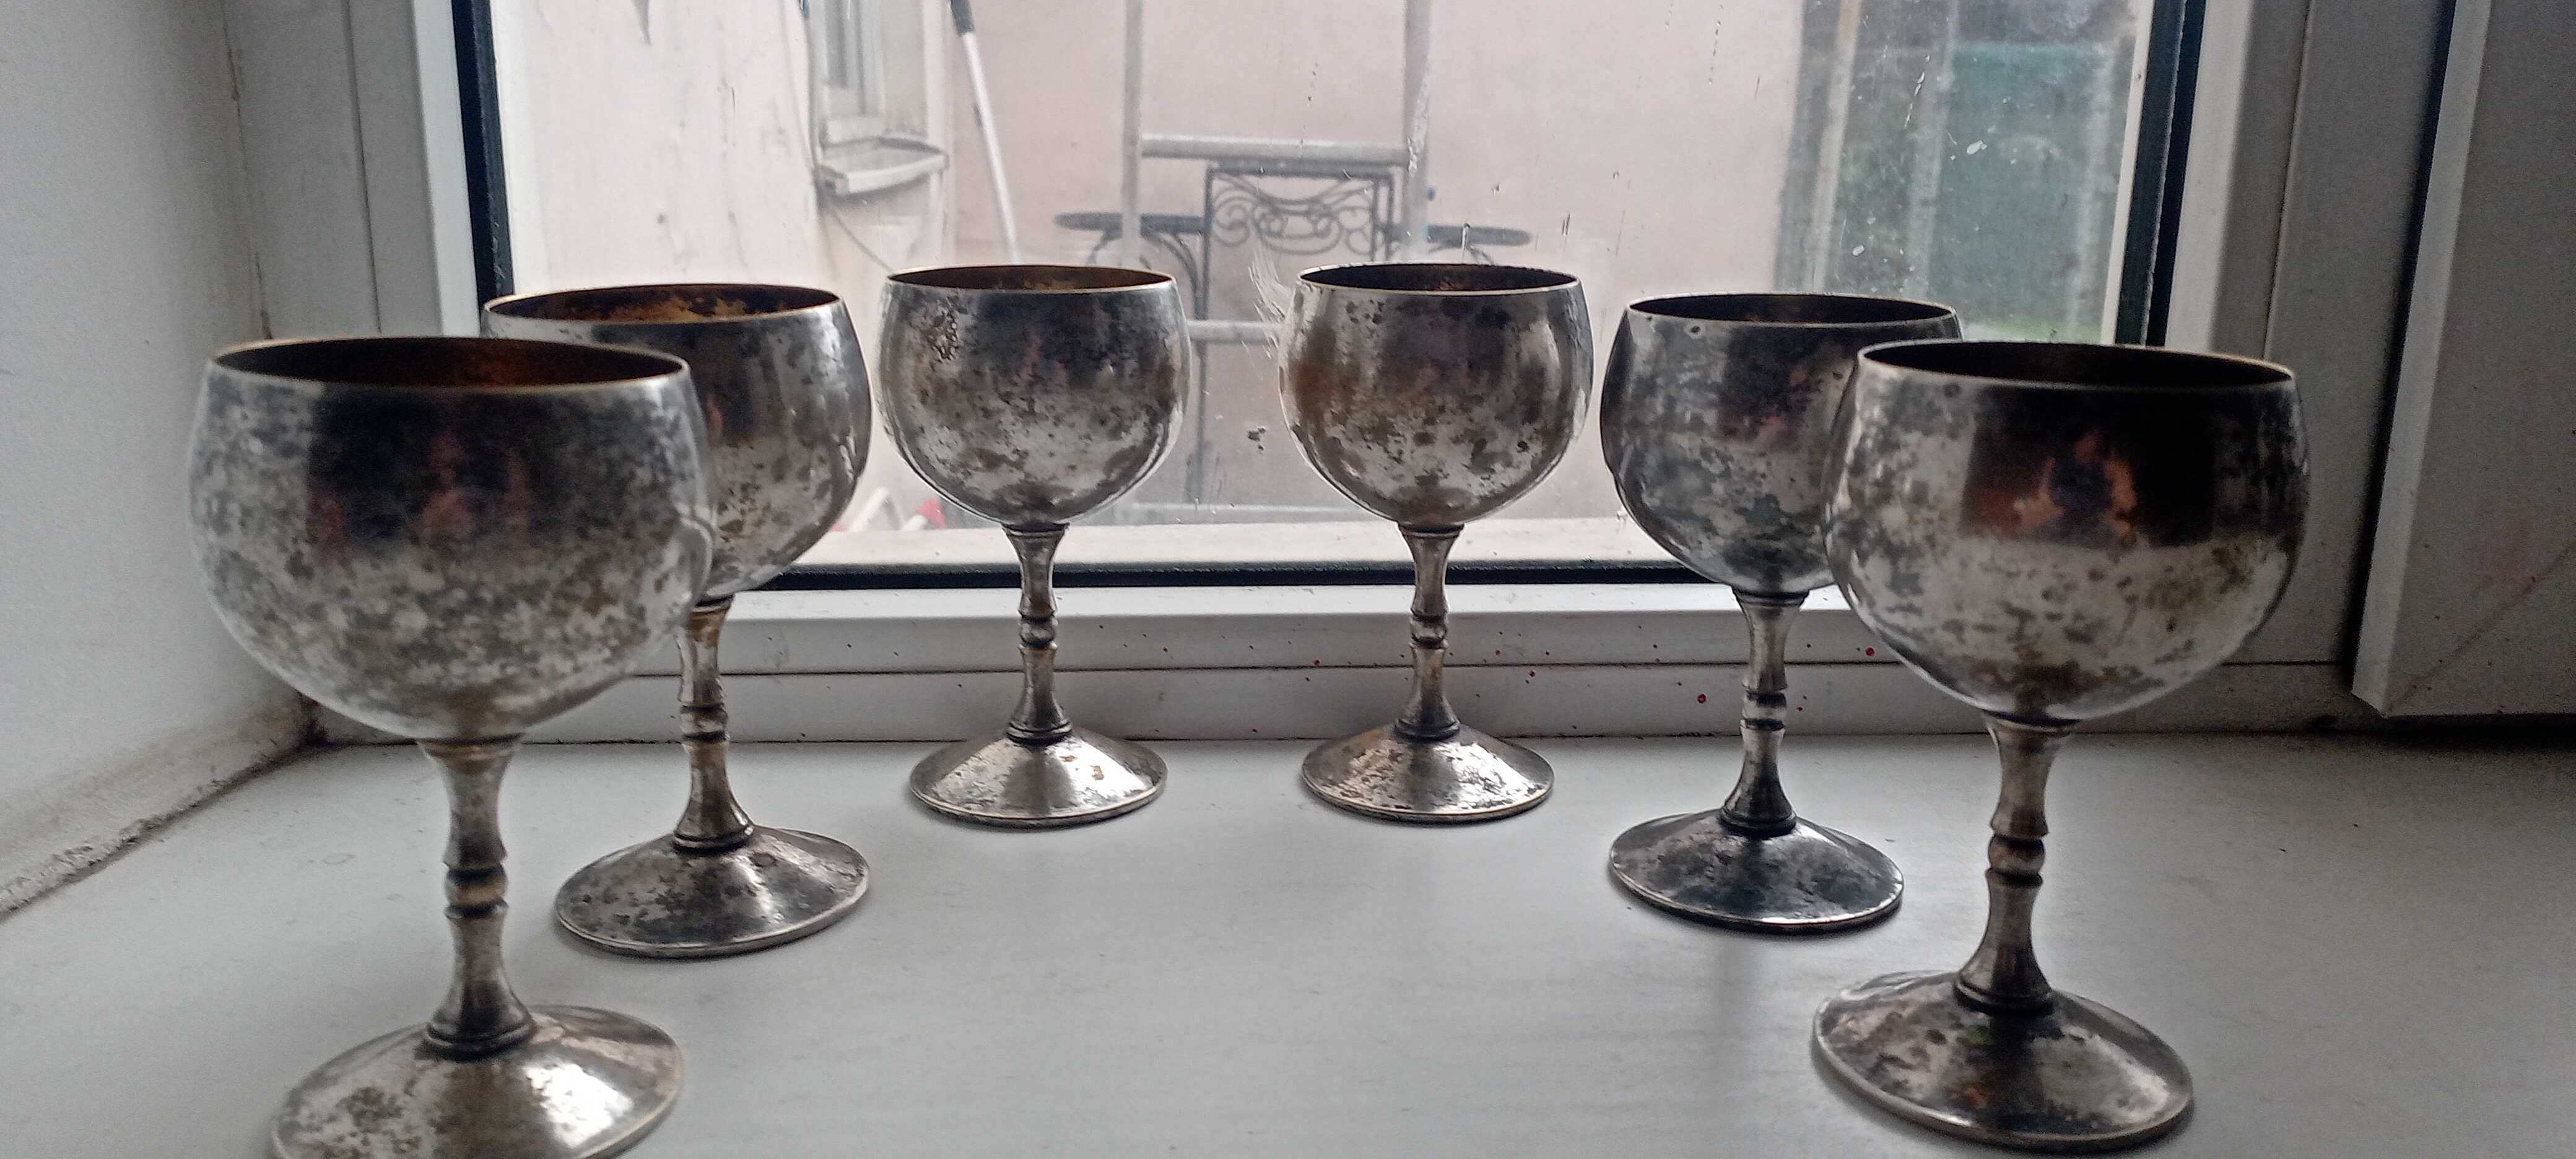 Коллекция винных чашек(6)–Латунь F.B.R. E.P. BRASS SPAIN – 1970-1979